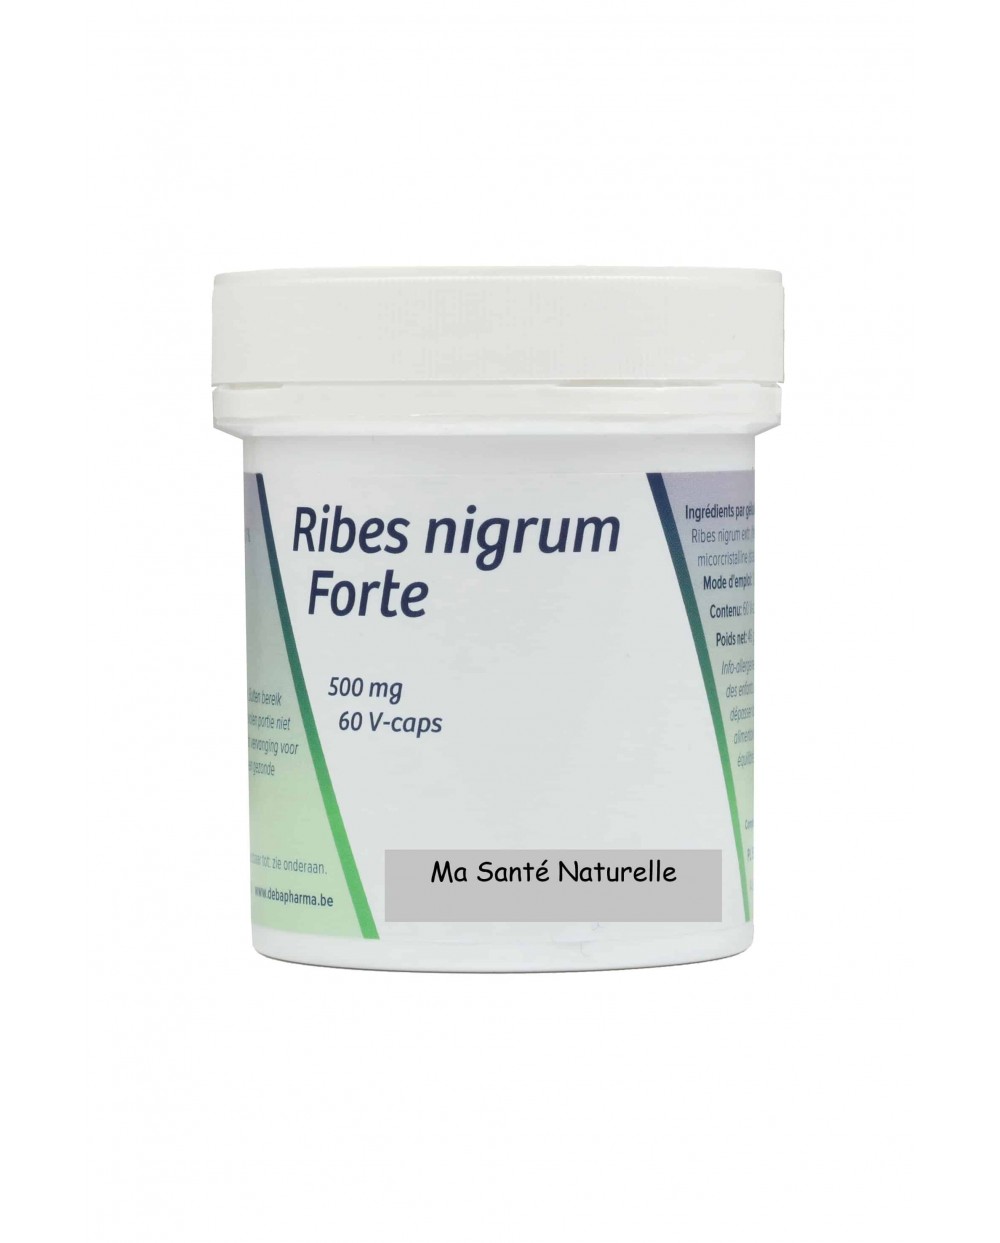 Ribes nigrum forte 500 mg (5:1 extrait feuille) - 60 capsules végétales